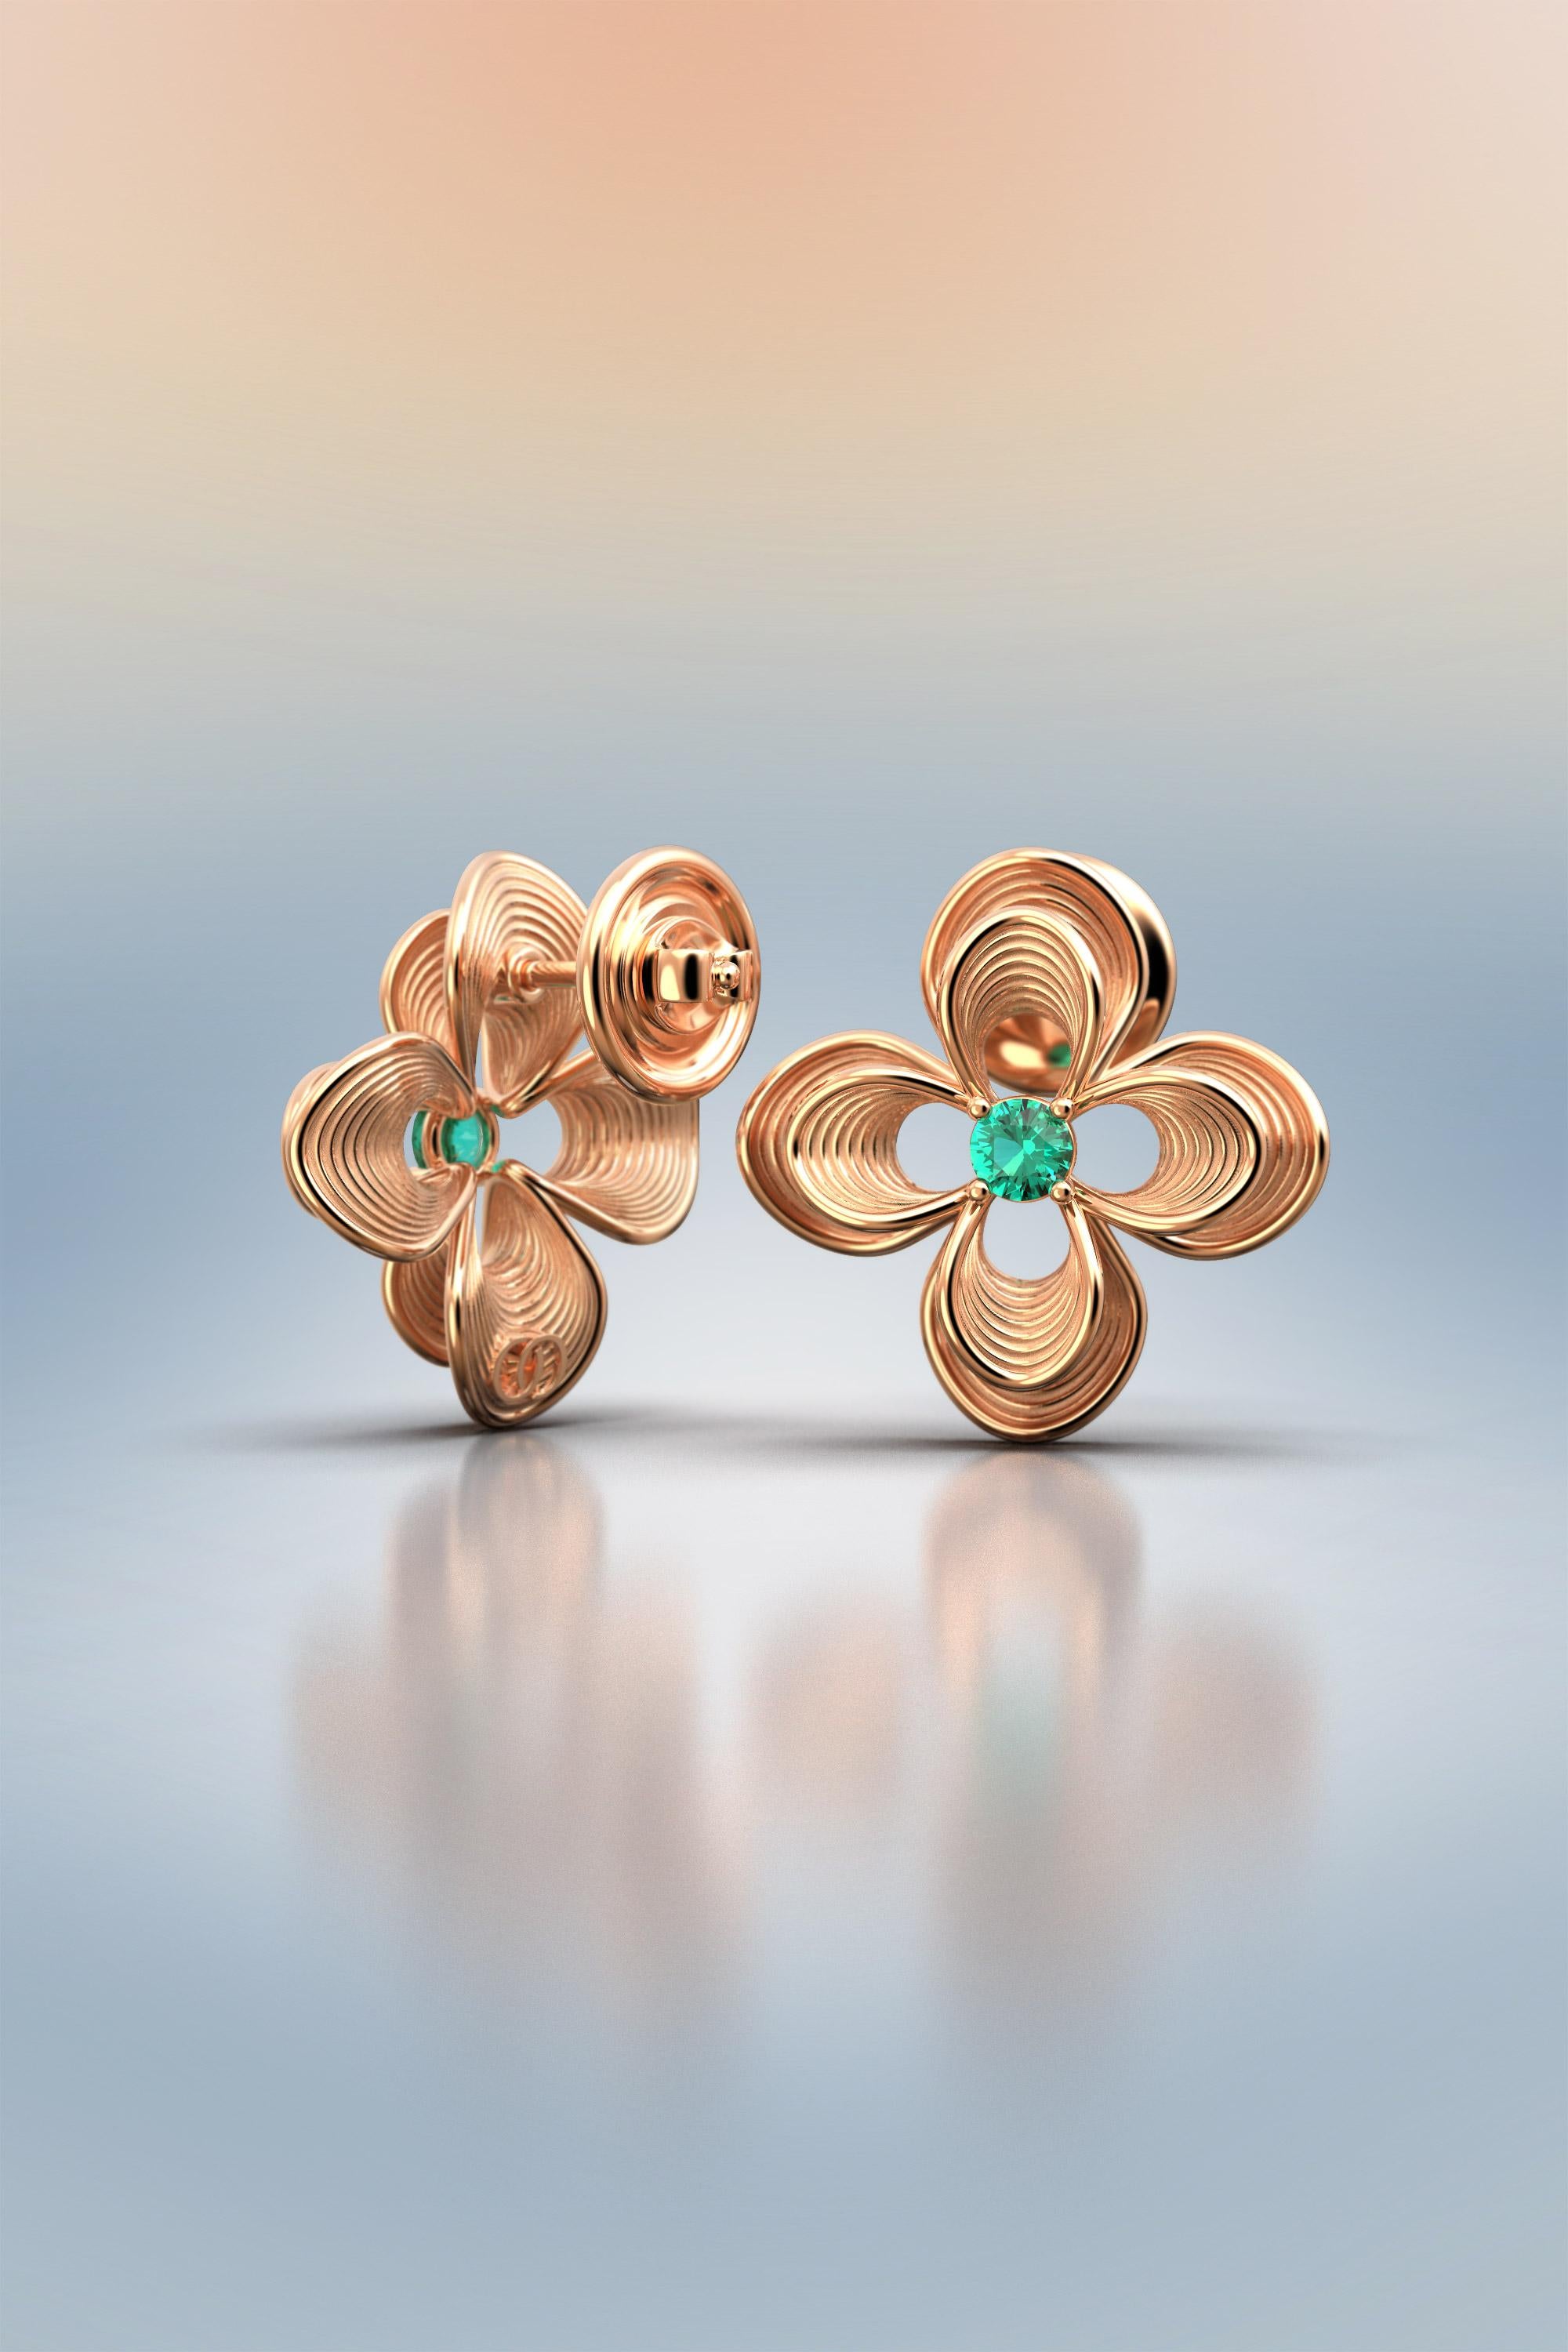 Emerald Stud Earrings in 14k Gold | Italian Jewelry by Oltremare Gioielli For Sale 3